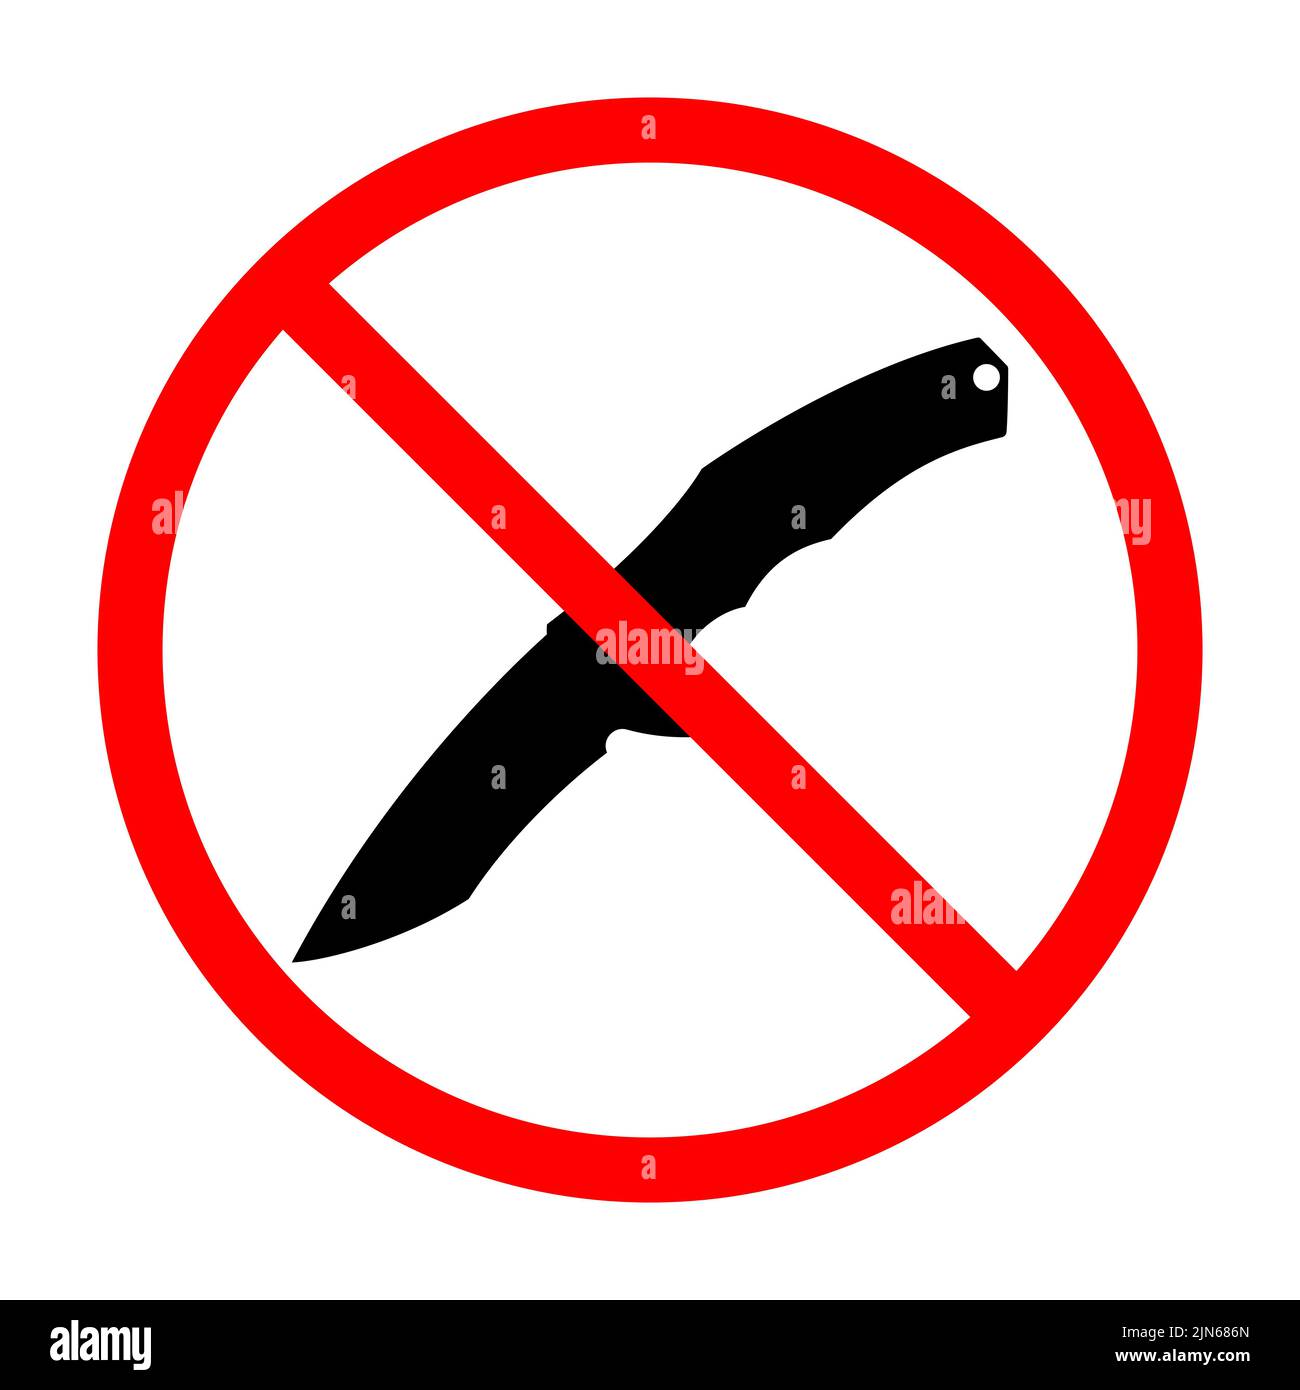 No Knife sign. Knife ban sign. Dangerous weapon. Prohibition sign. Vector illustration.v Stock Vector